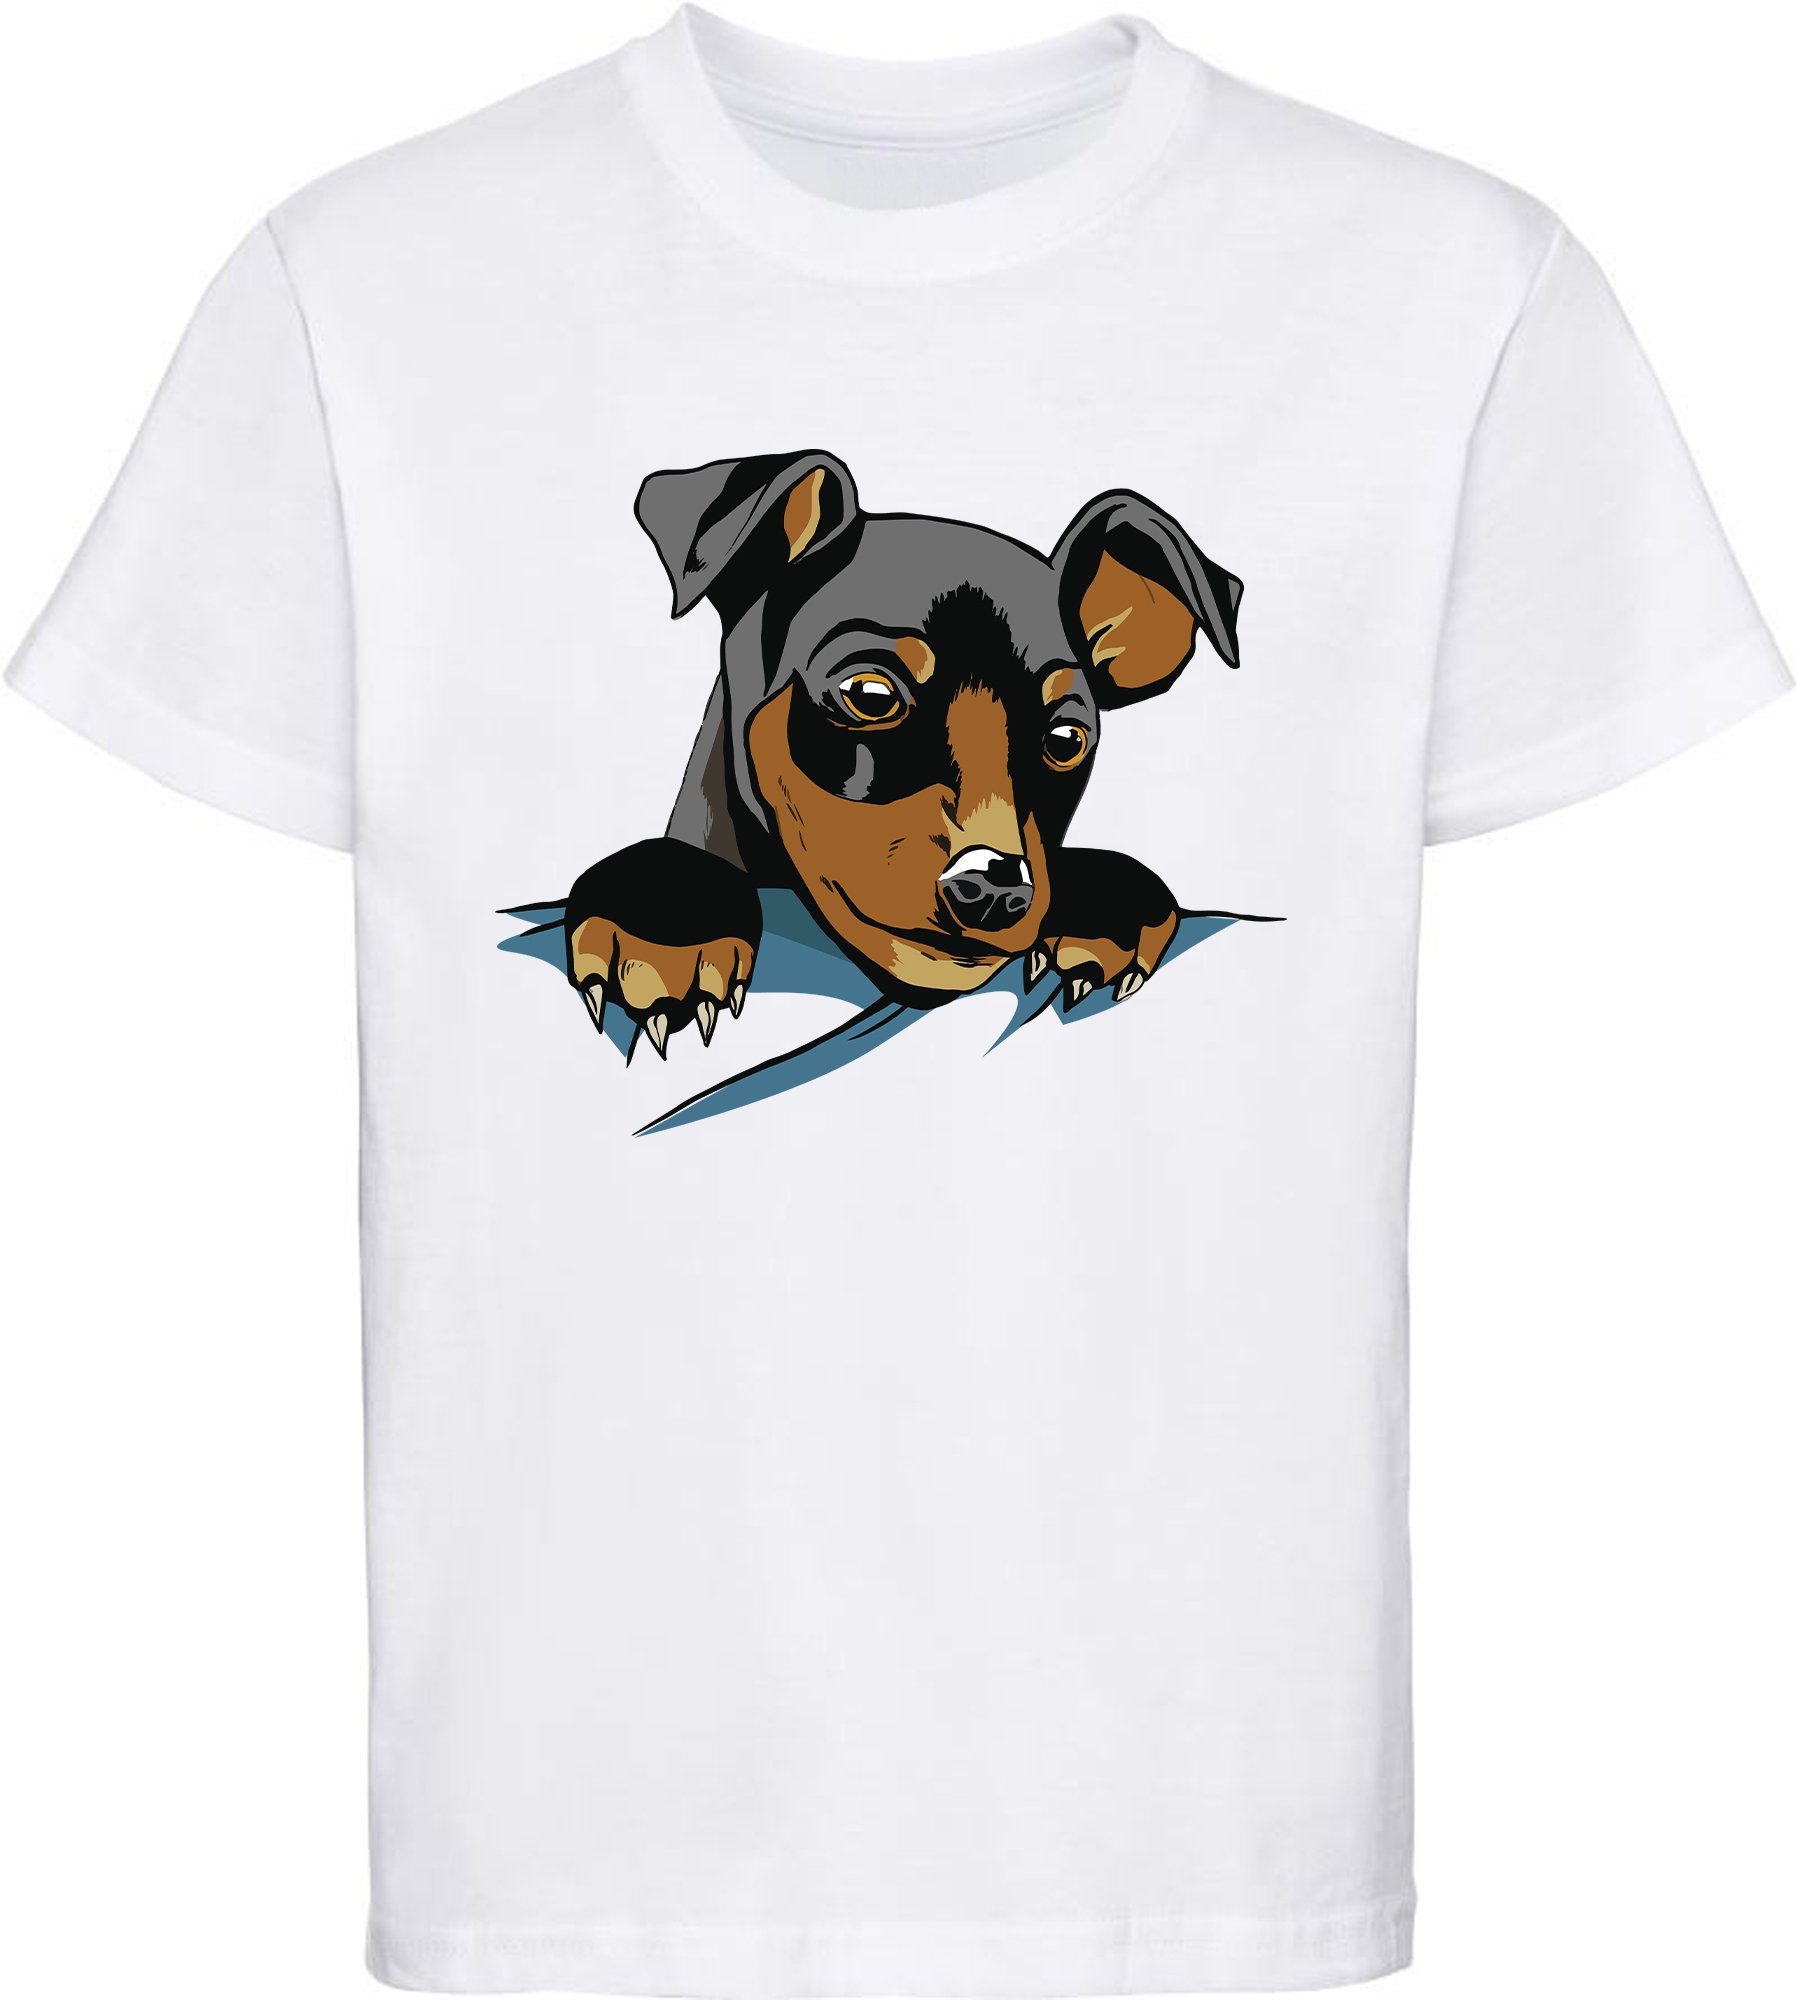 MyDesign24 Print-Shirt bedrucktes Kinder Hunde T-Shirt - Süßer Welpe Baumwollshirt mit Aufdruck, i227 weiss